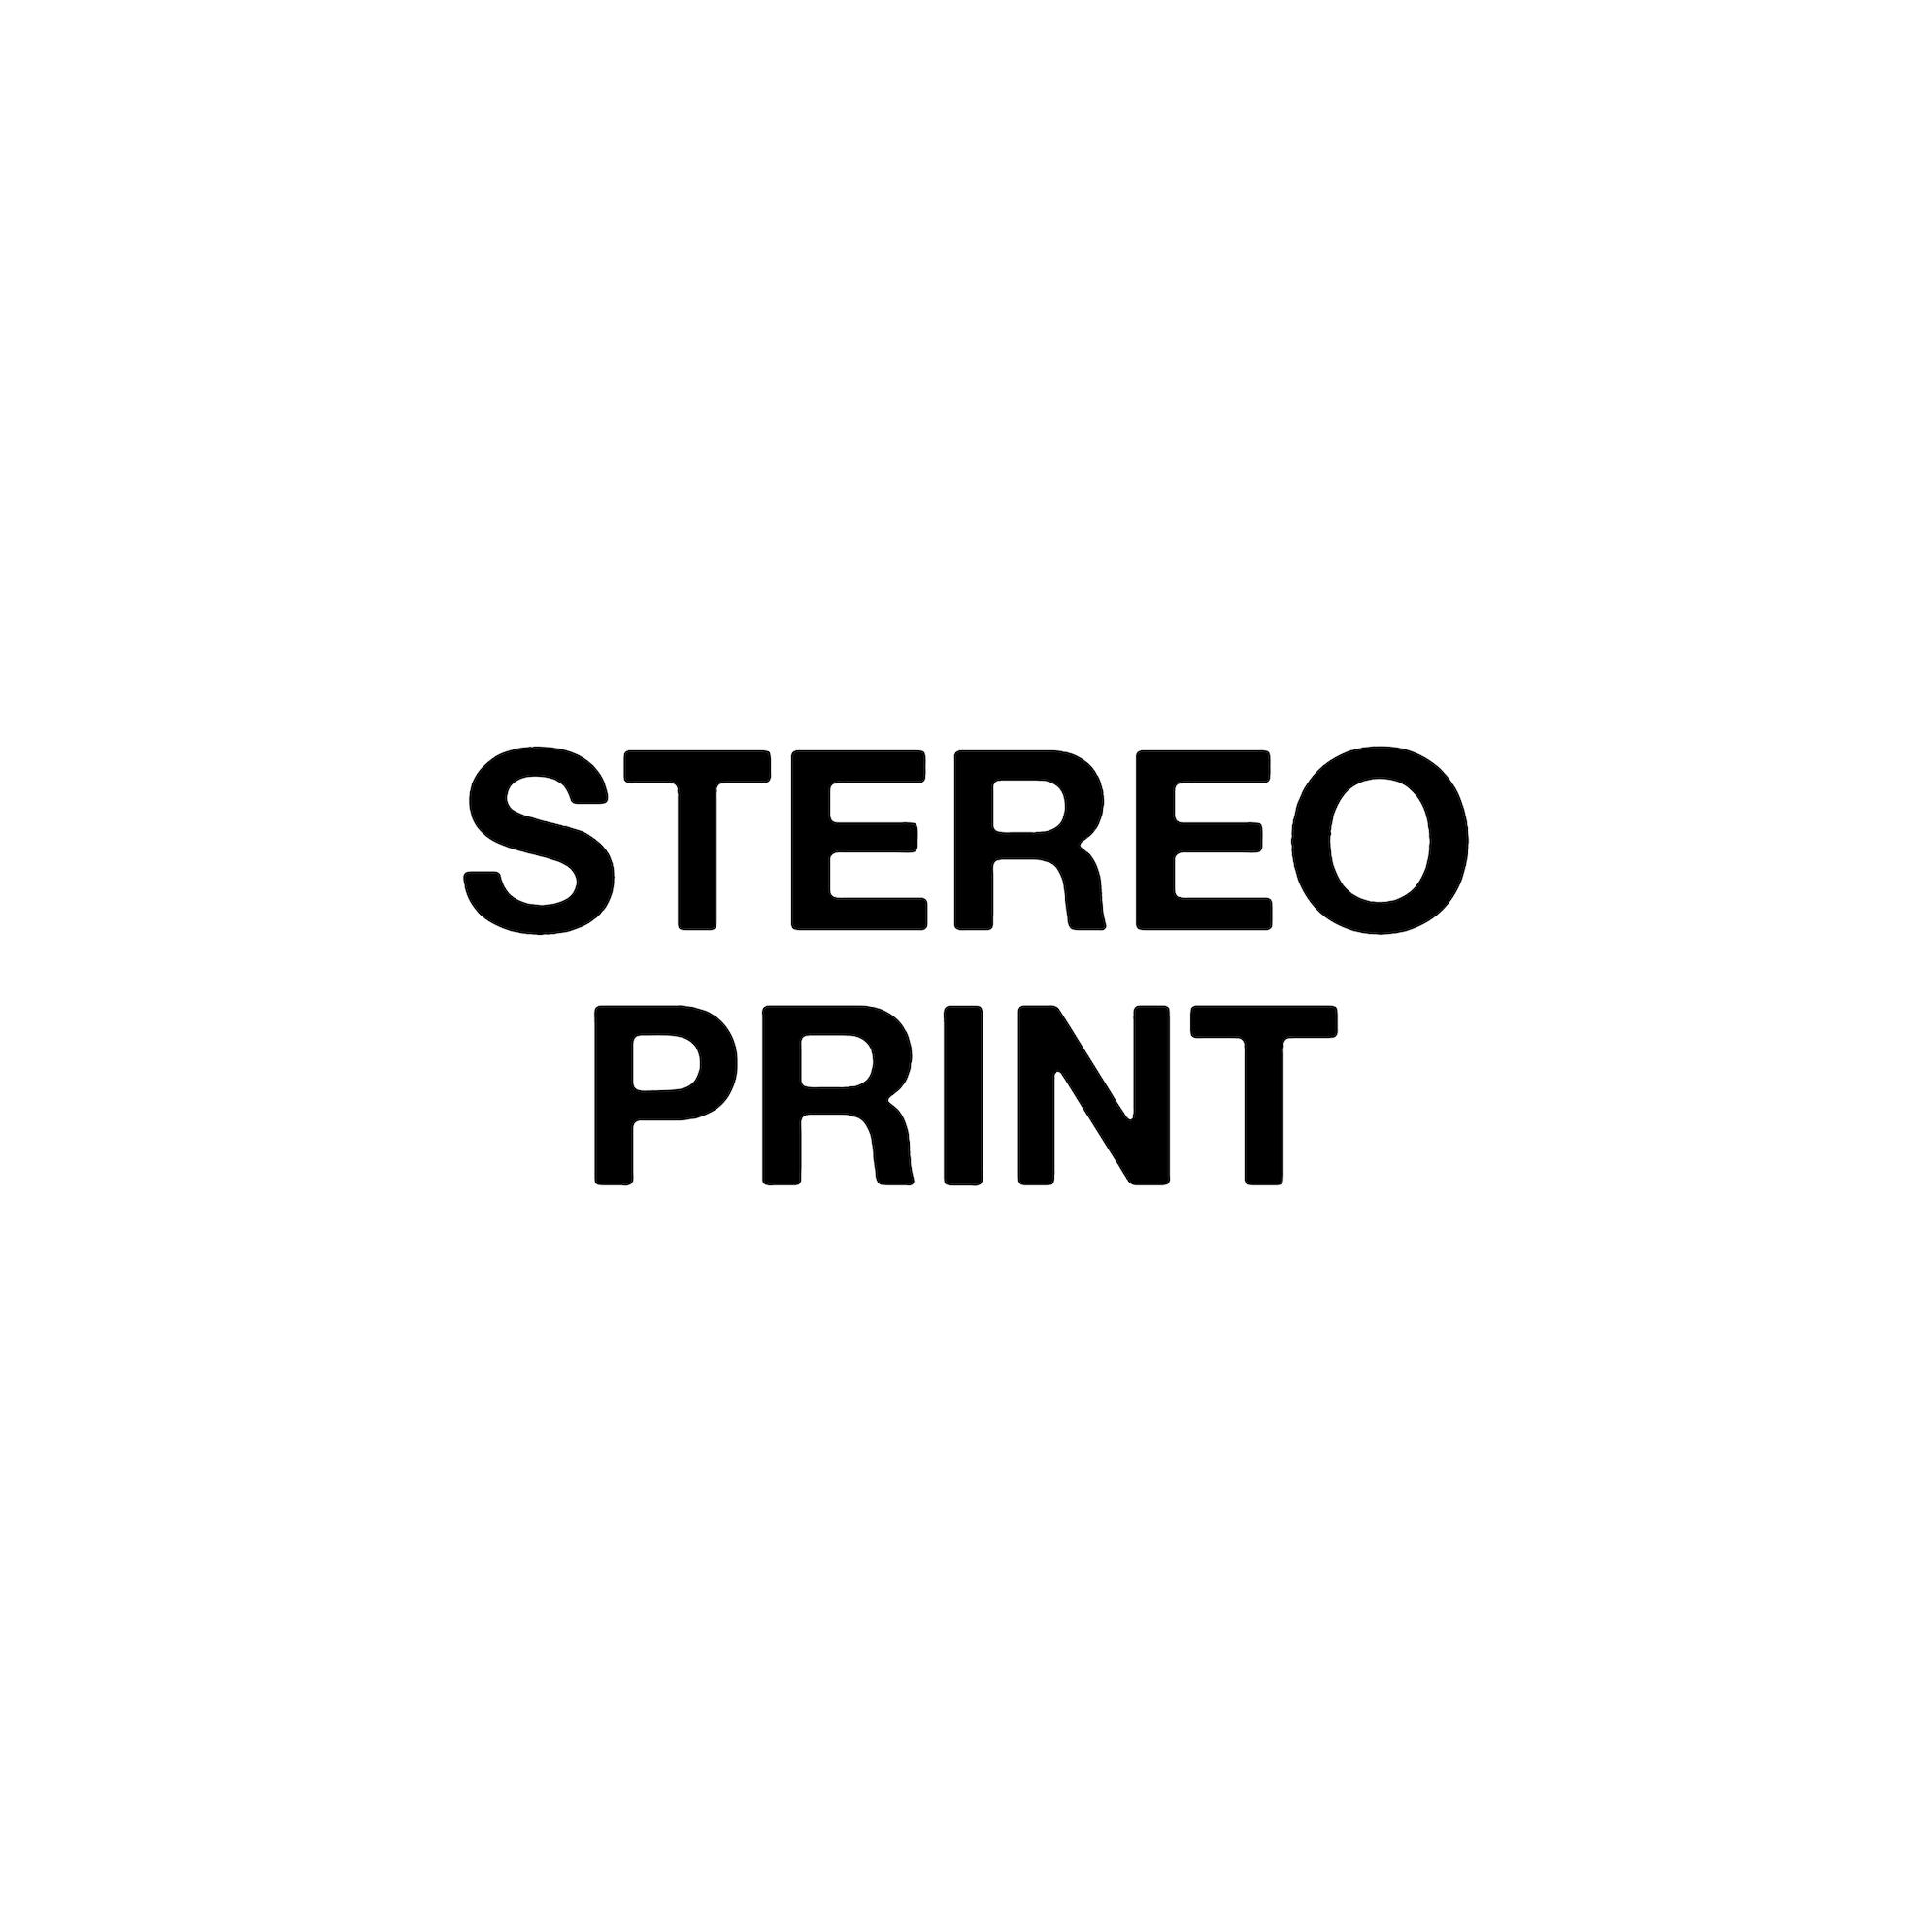 Stereo Print – “Closer”